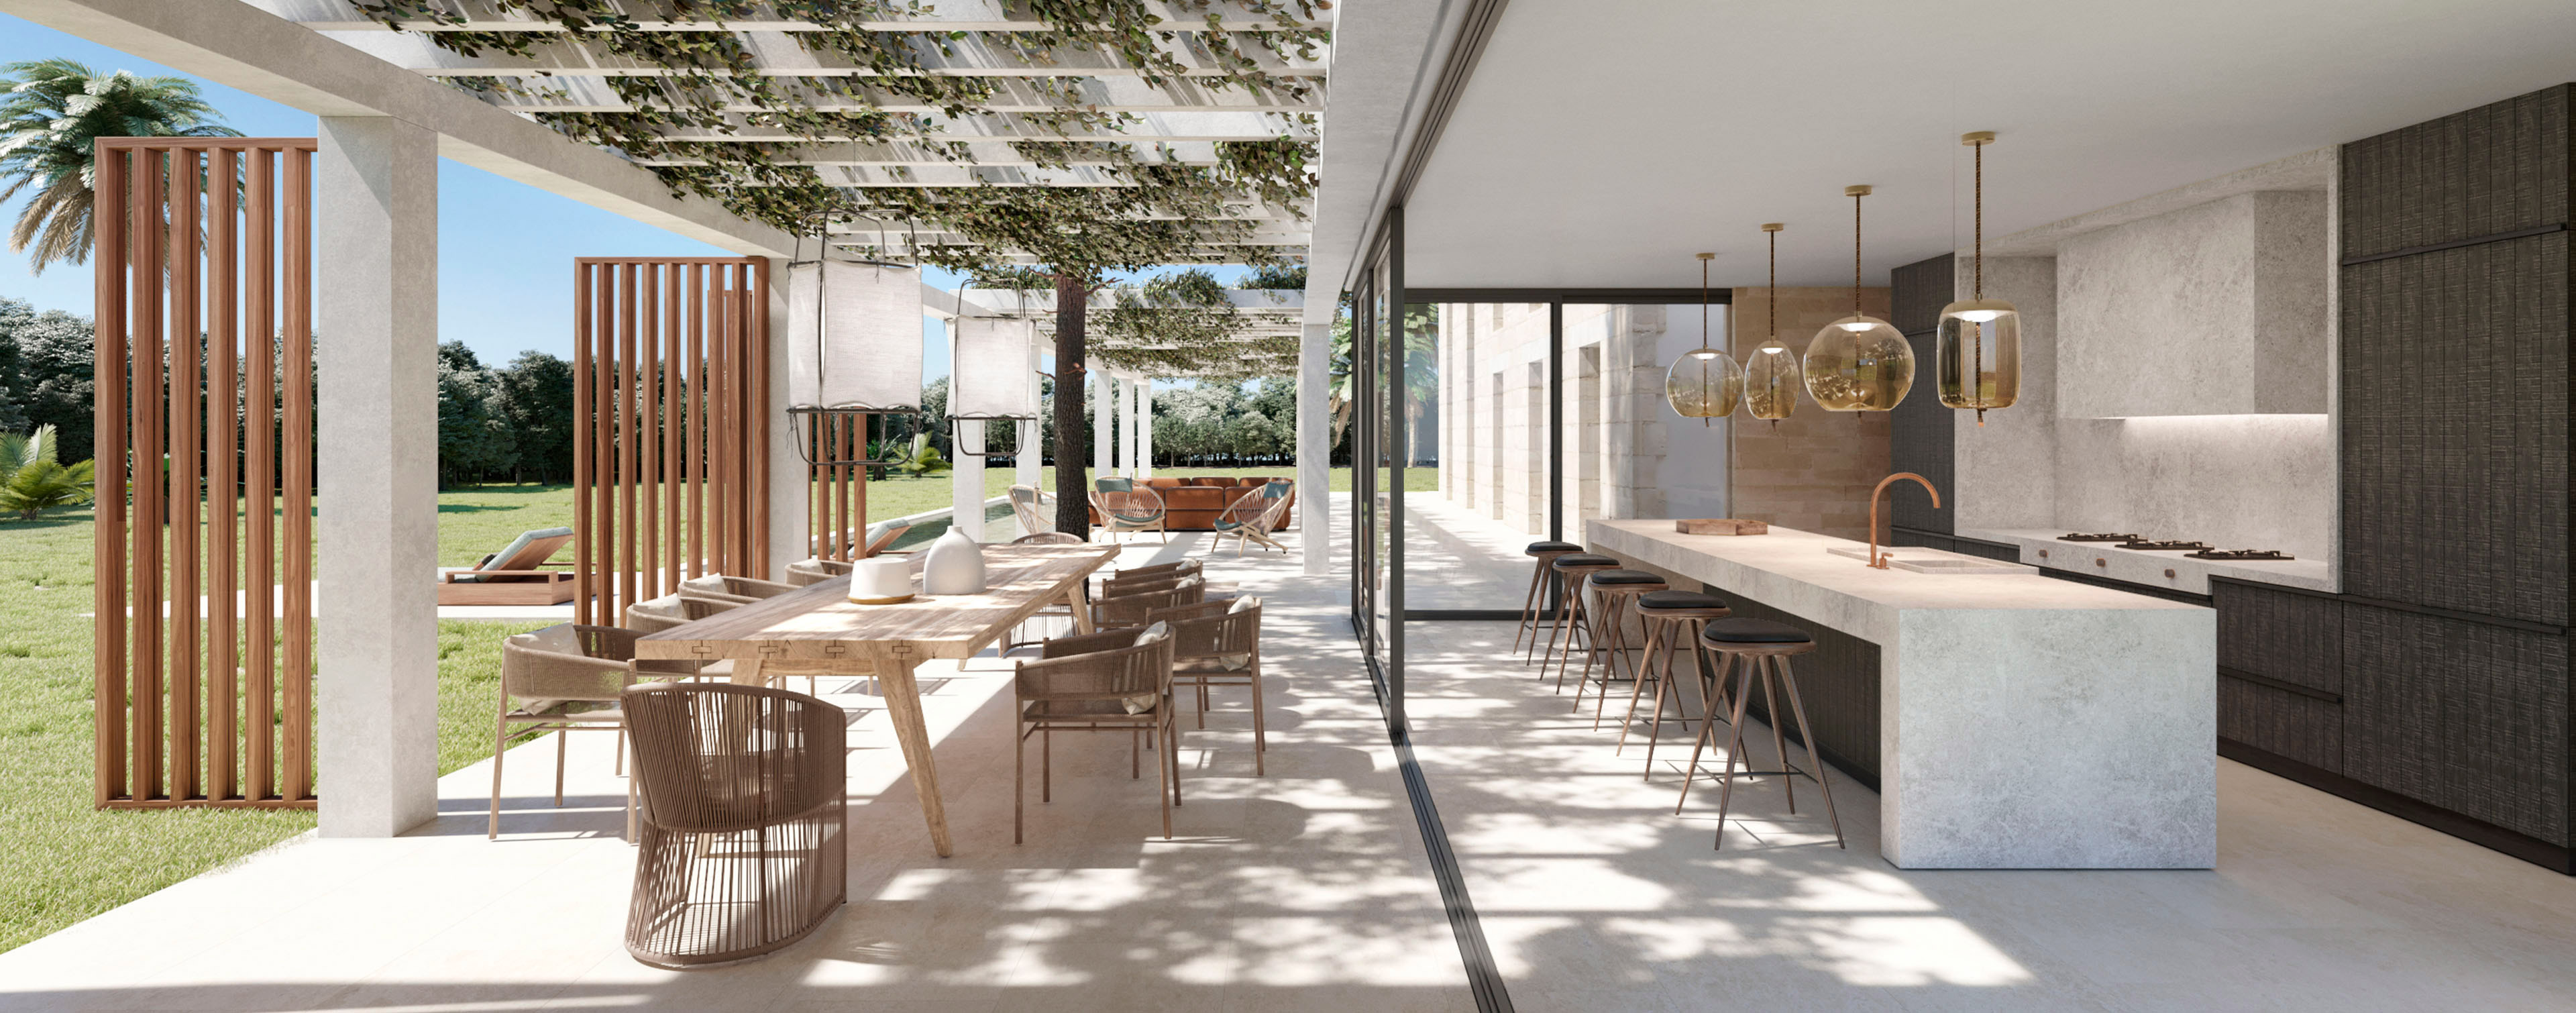 luv studio luxury architects menorca sa vigia house IMG 01 - LUV Studio - Architecture et design - Barcelone